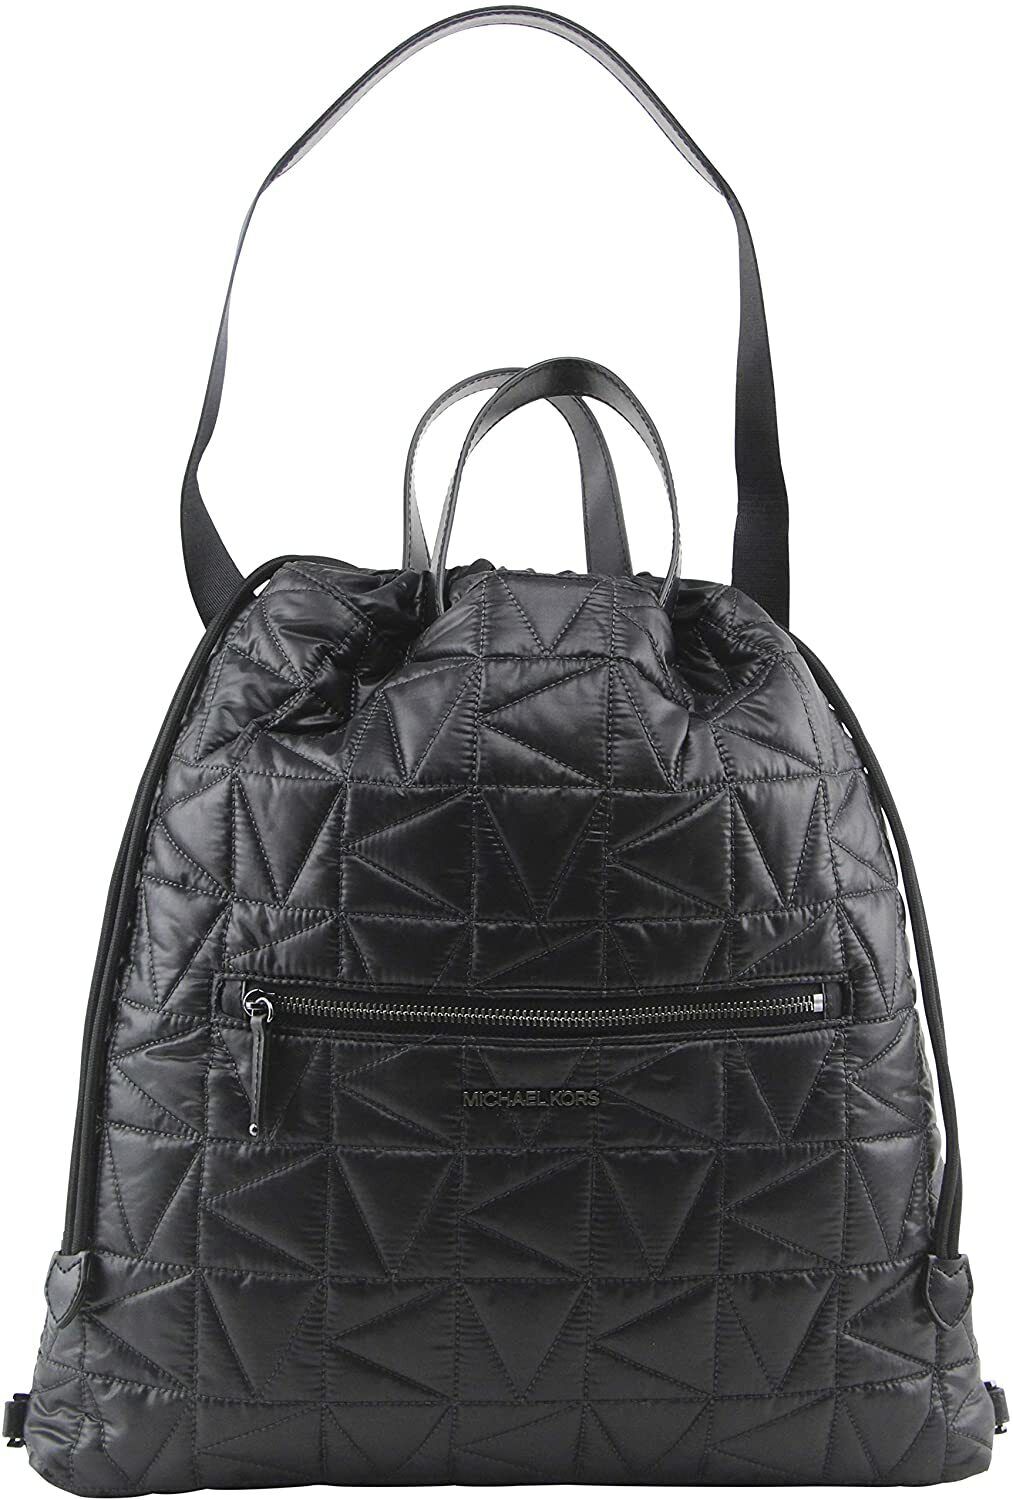 Michel Kors Winnie $448 Convertible Backpack Travel Handbag Purse Black Quilted